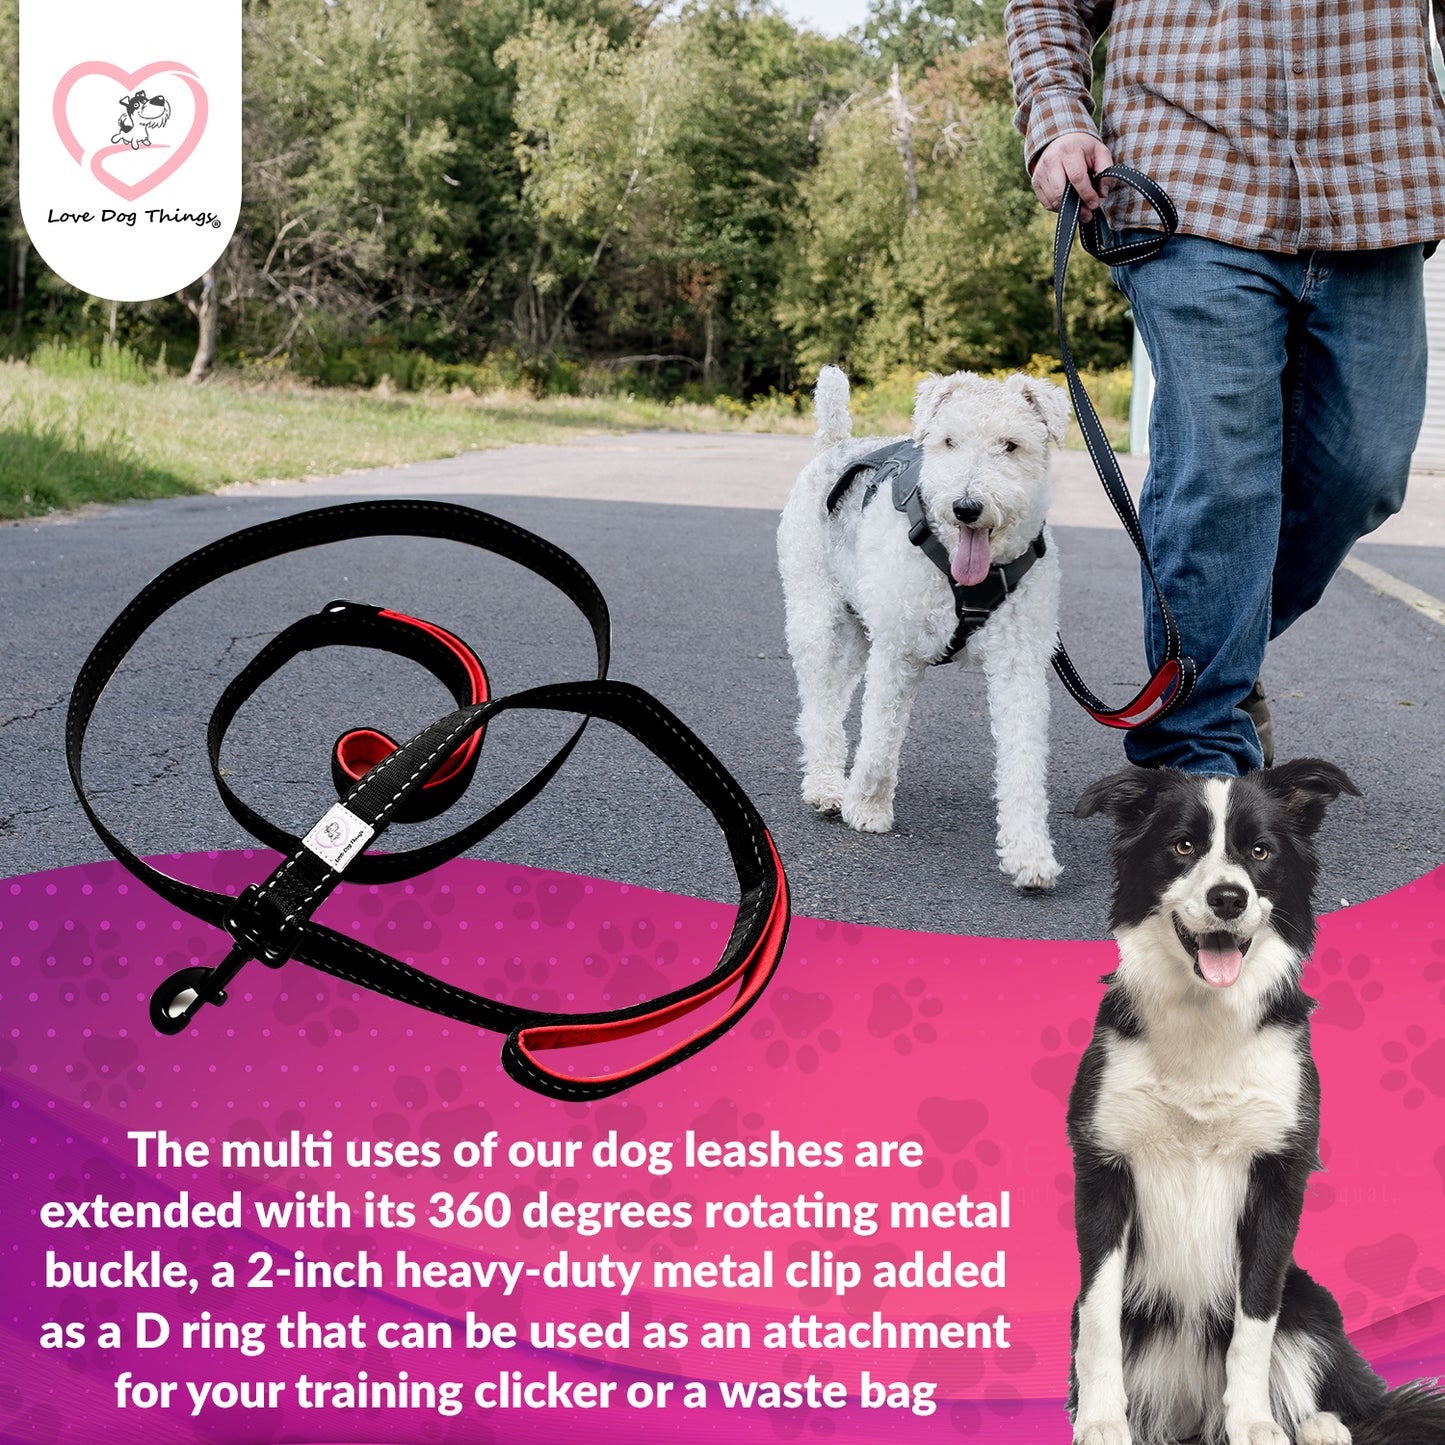 Love Dog Things HandleX2, Dual Handle Leash- 6 Feet Premium Quality Reflective Leash